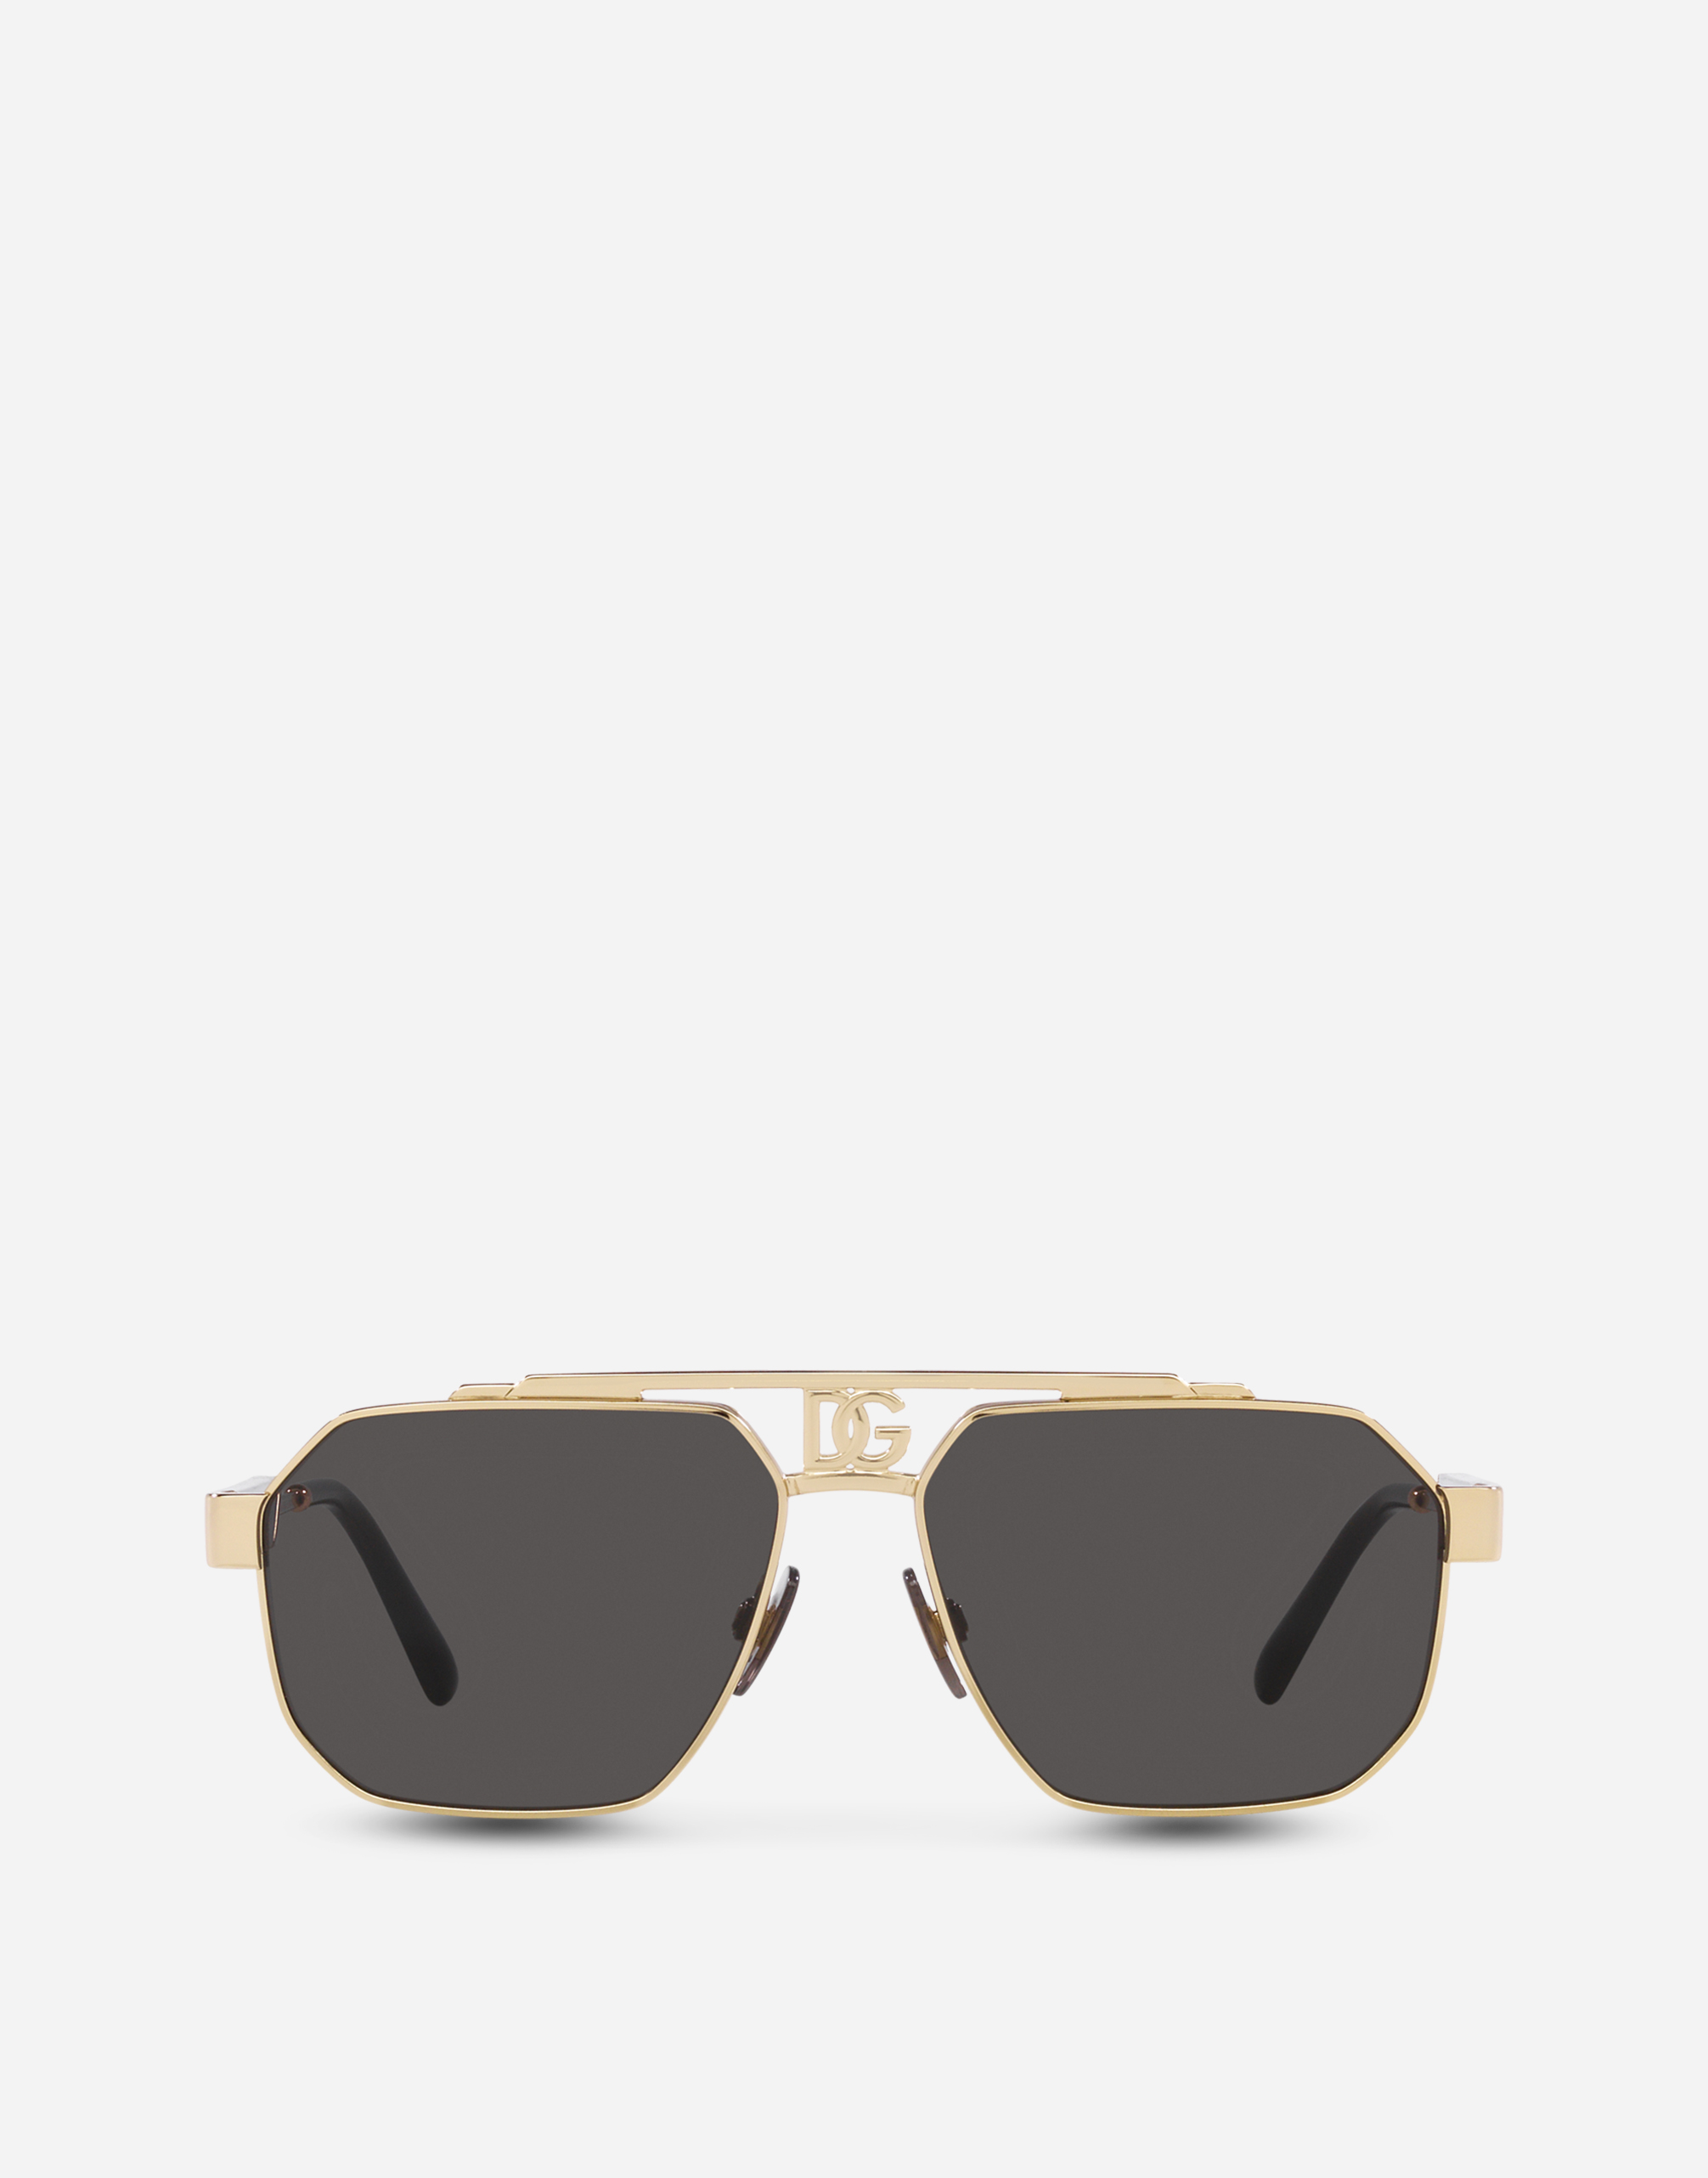 Dark Sicily Sunglasses in Gold